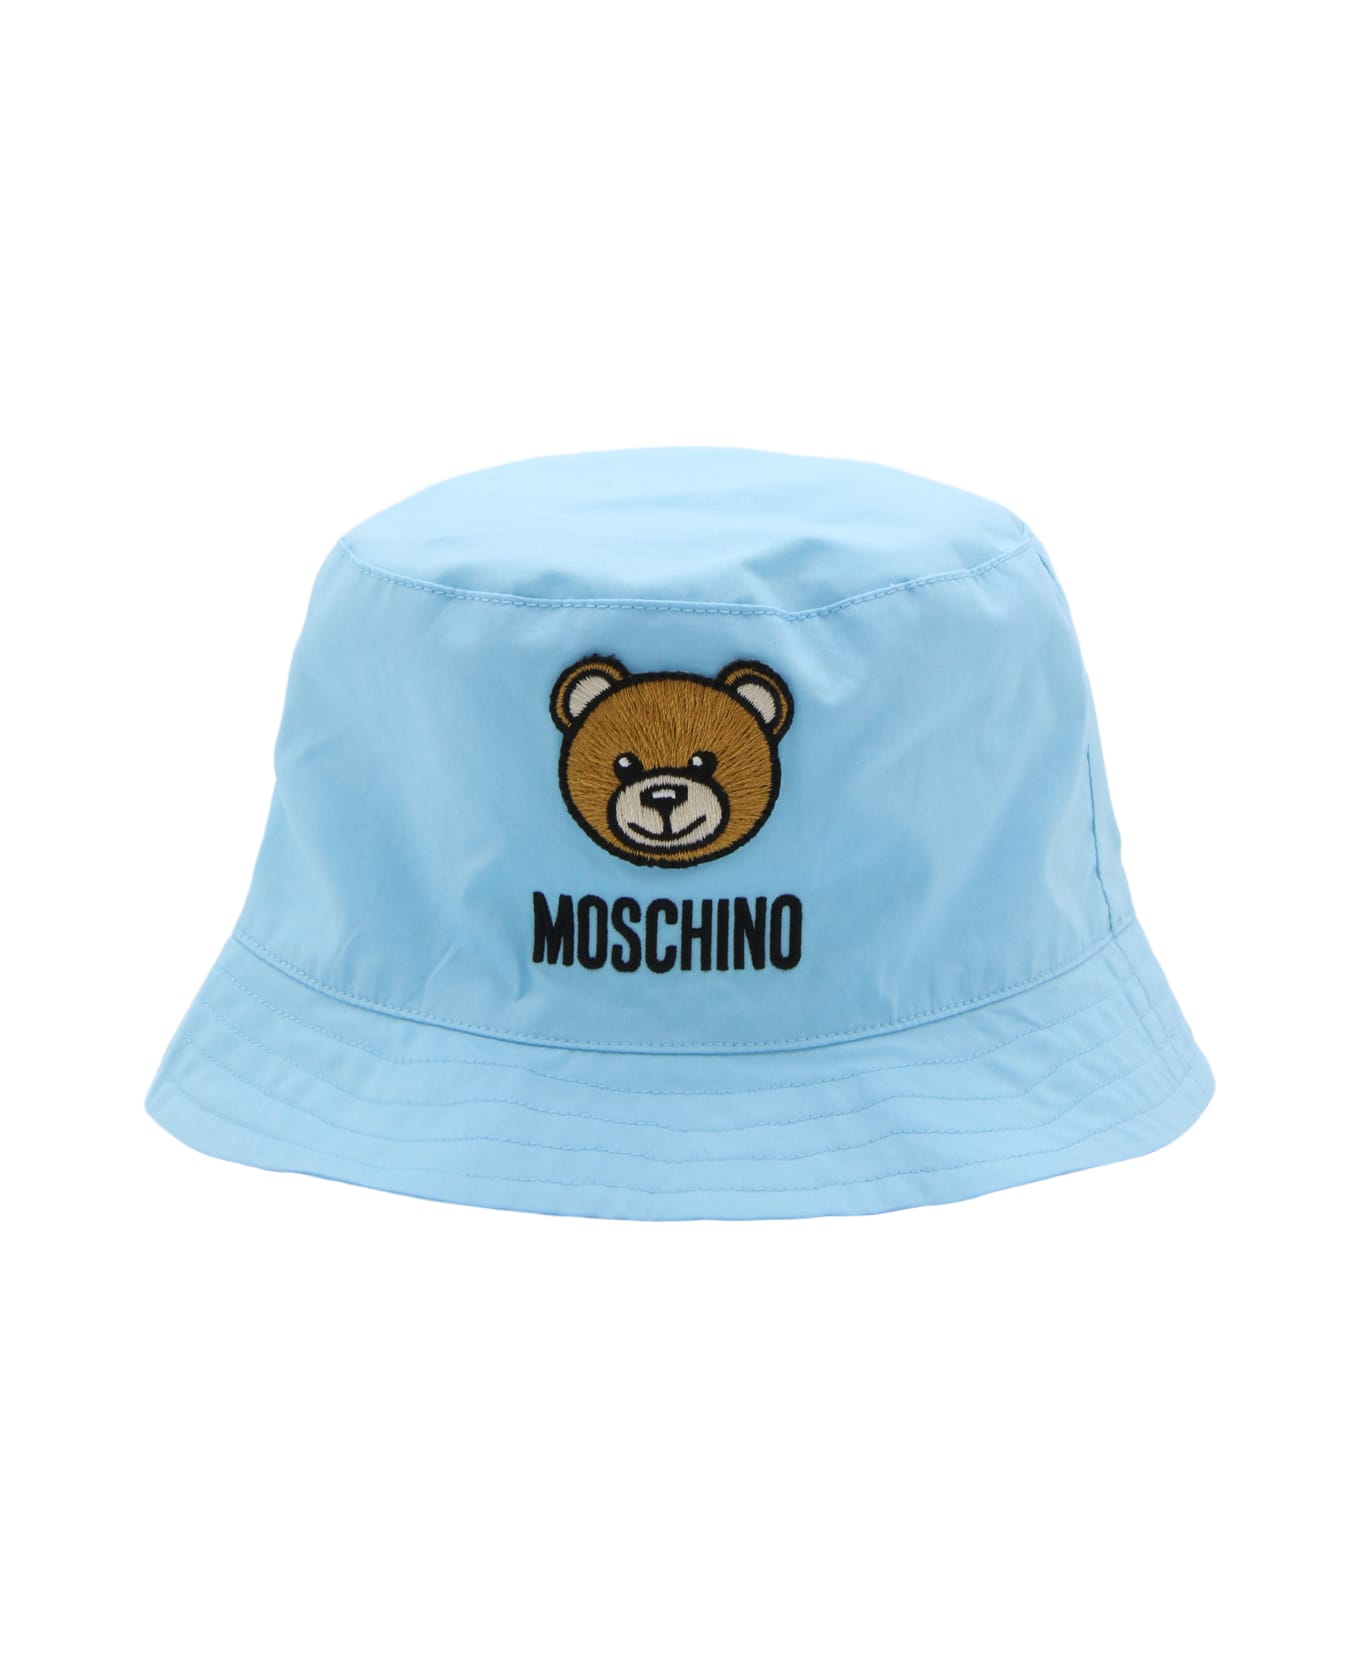 Moschino Light Blue Cotton Bucket Hat - CRYSTAL BLU